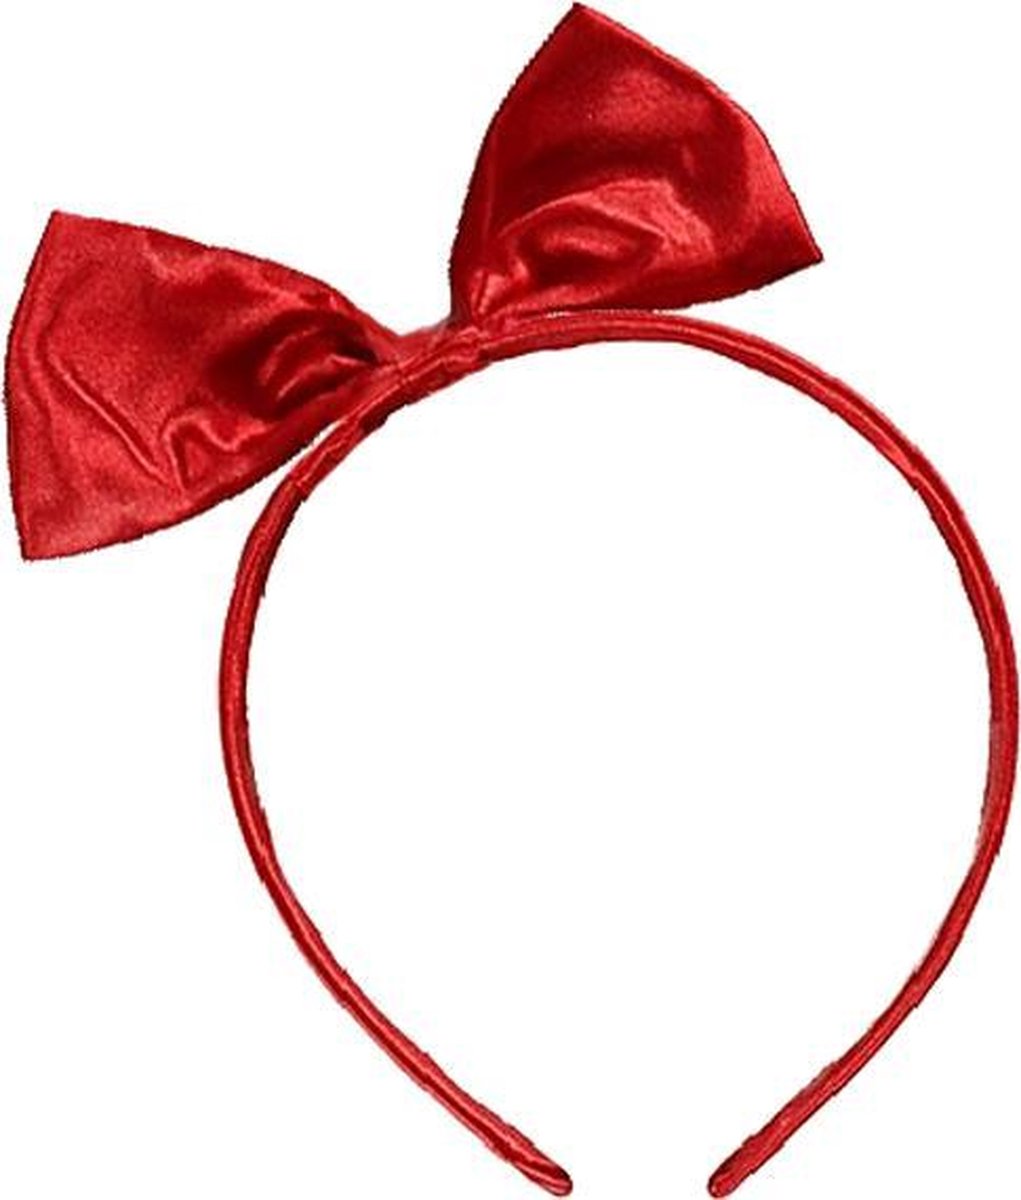 Sneeuwwitje haarband rode strik | bol.com